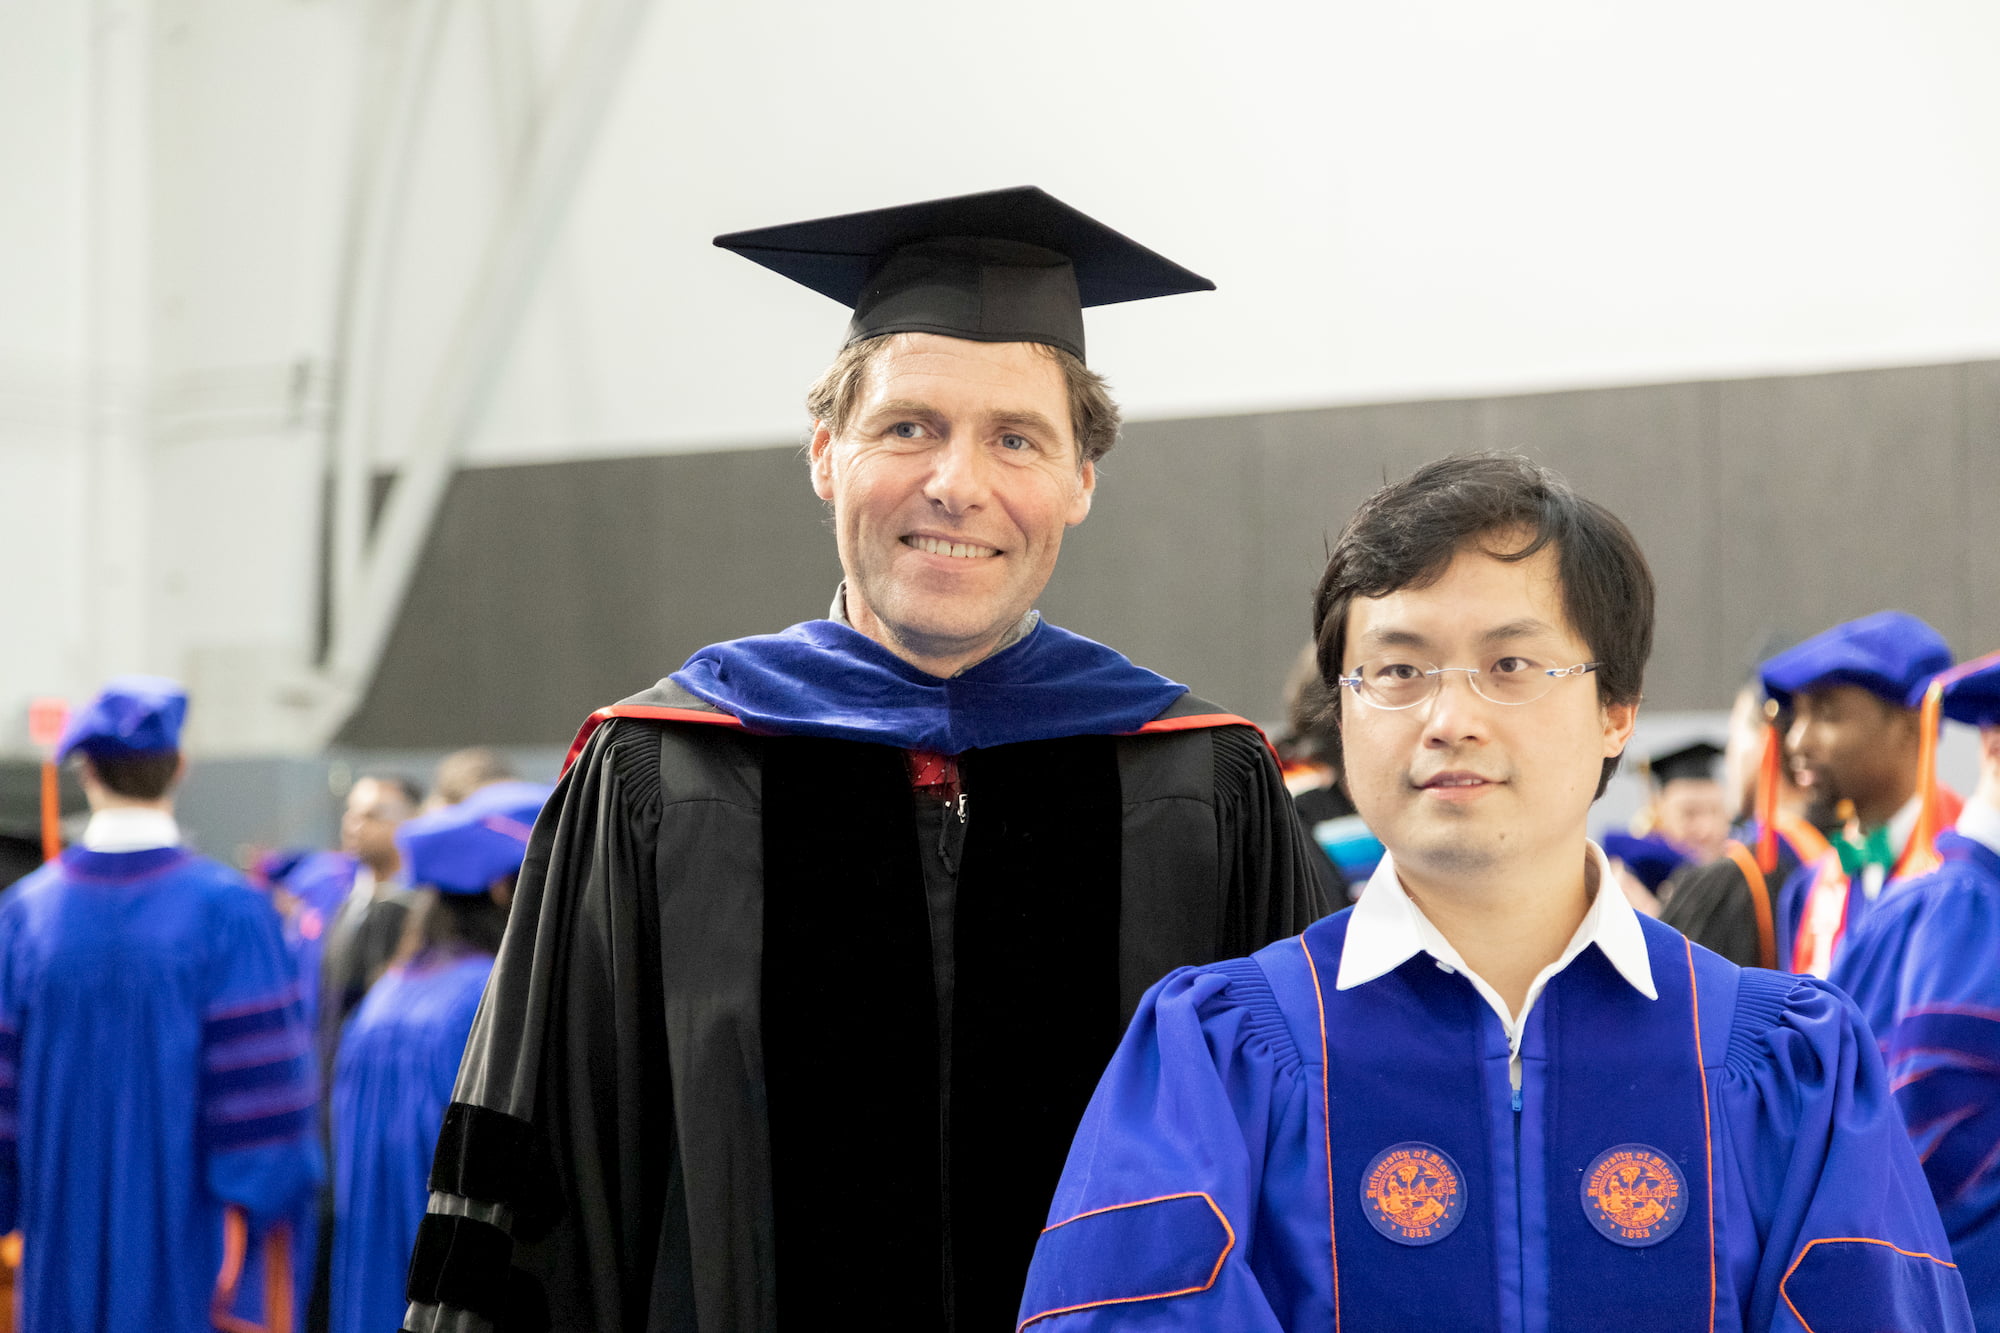 A professor and a student in graduation regalia